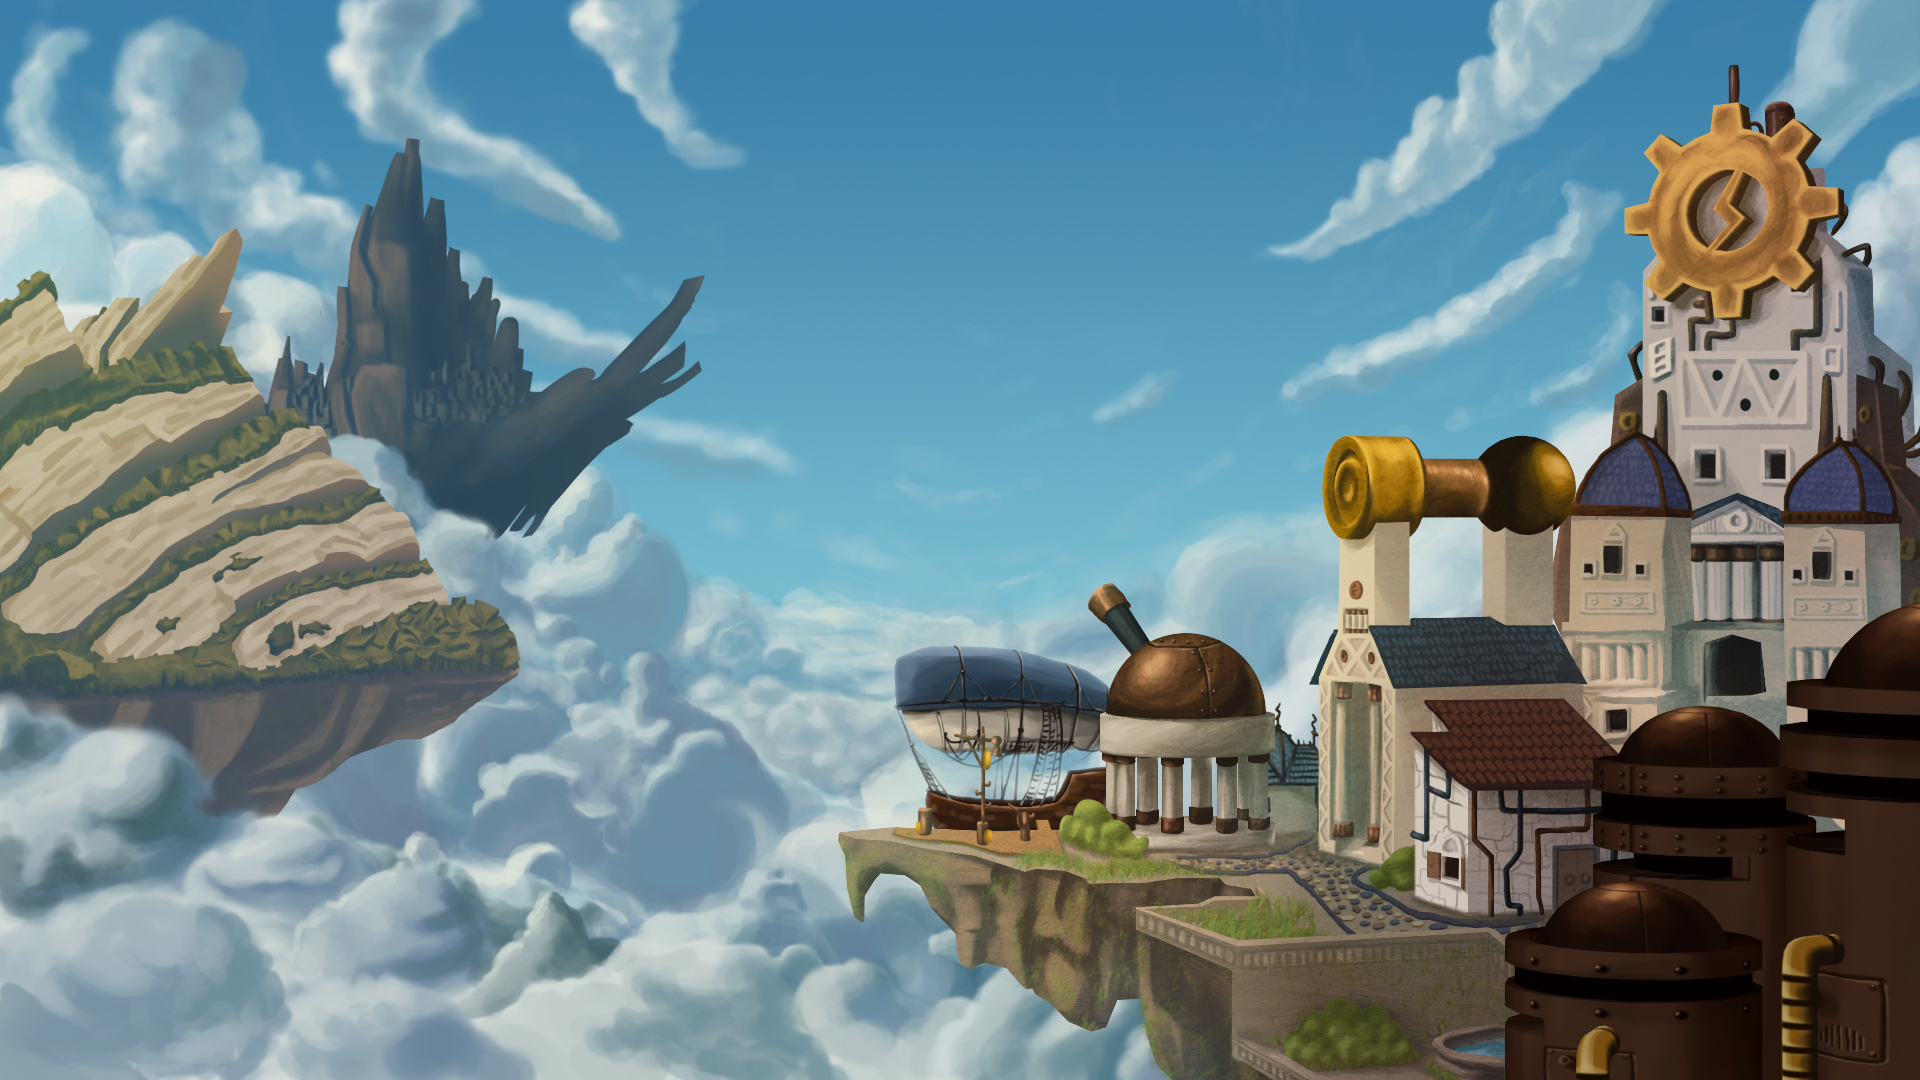 Illustration îles flottantes steampunk